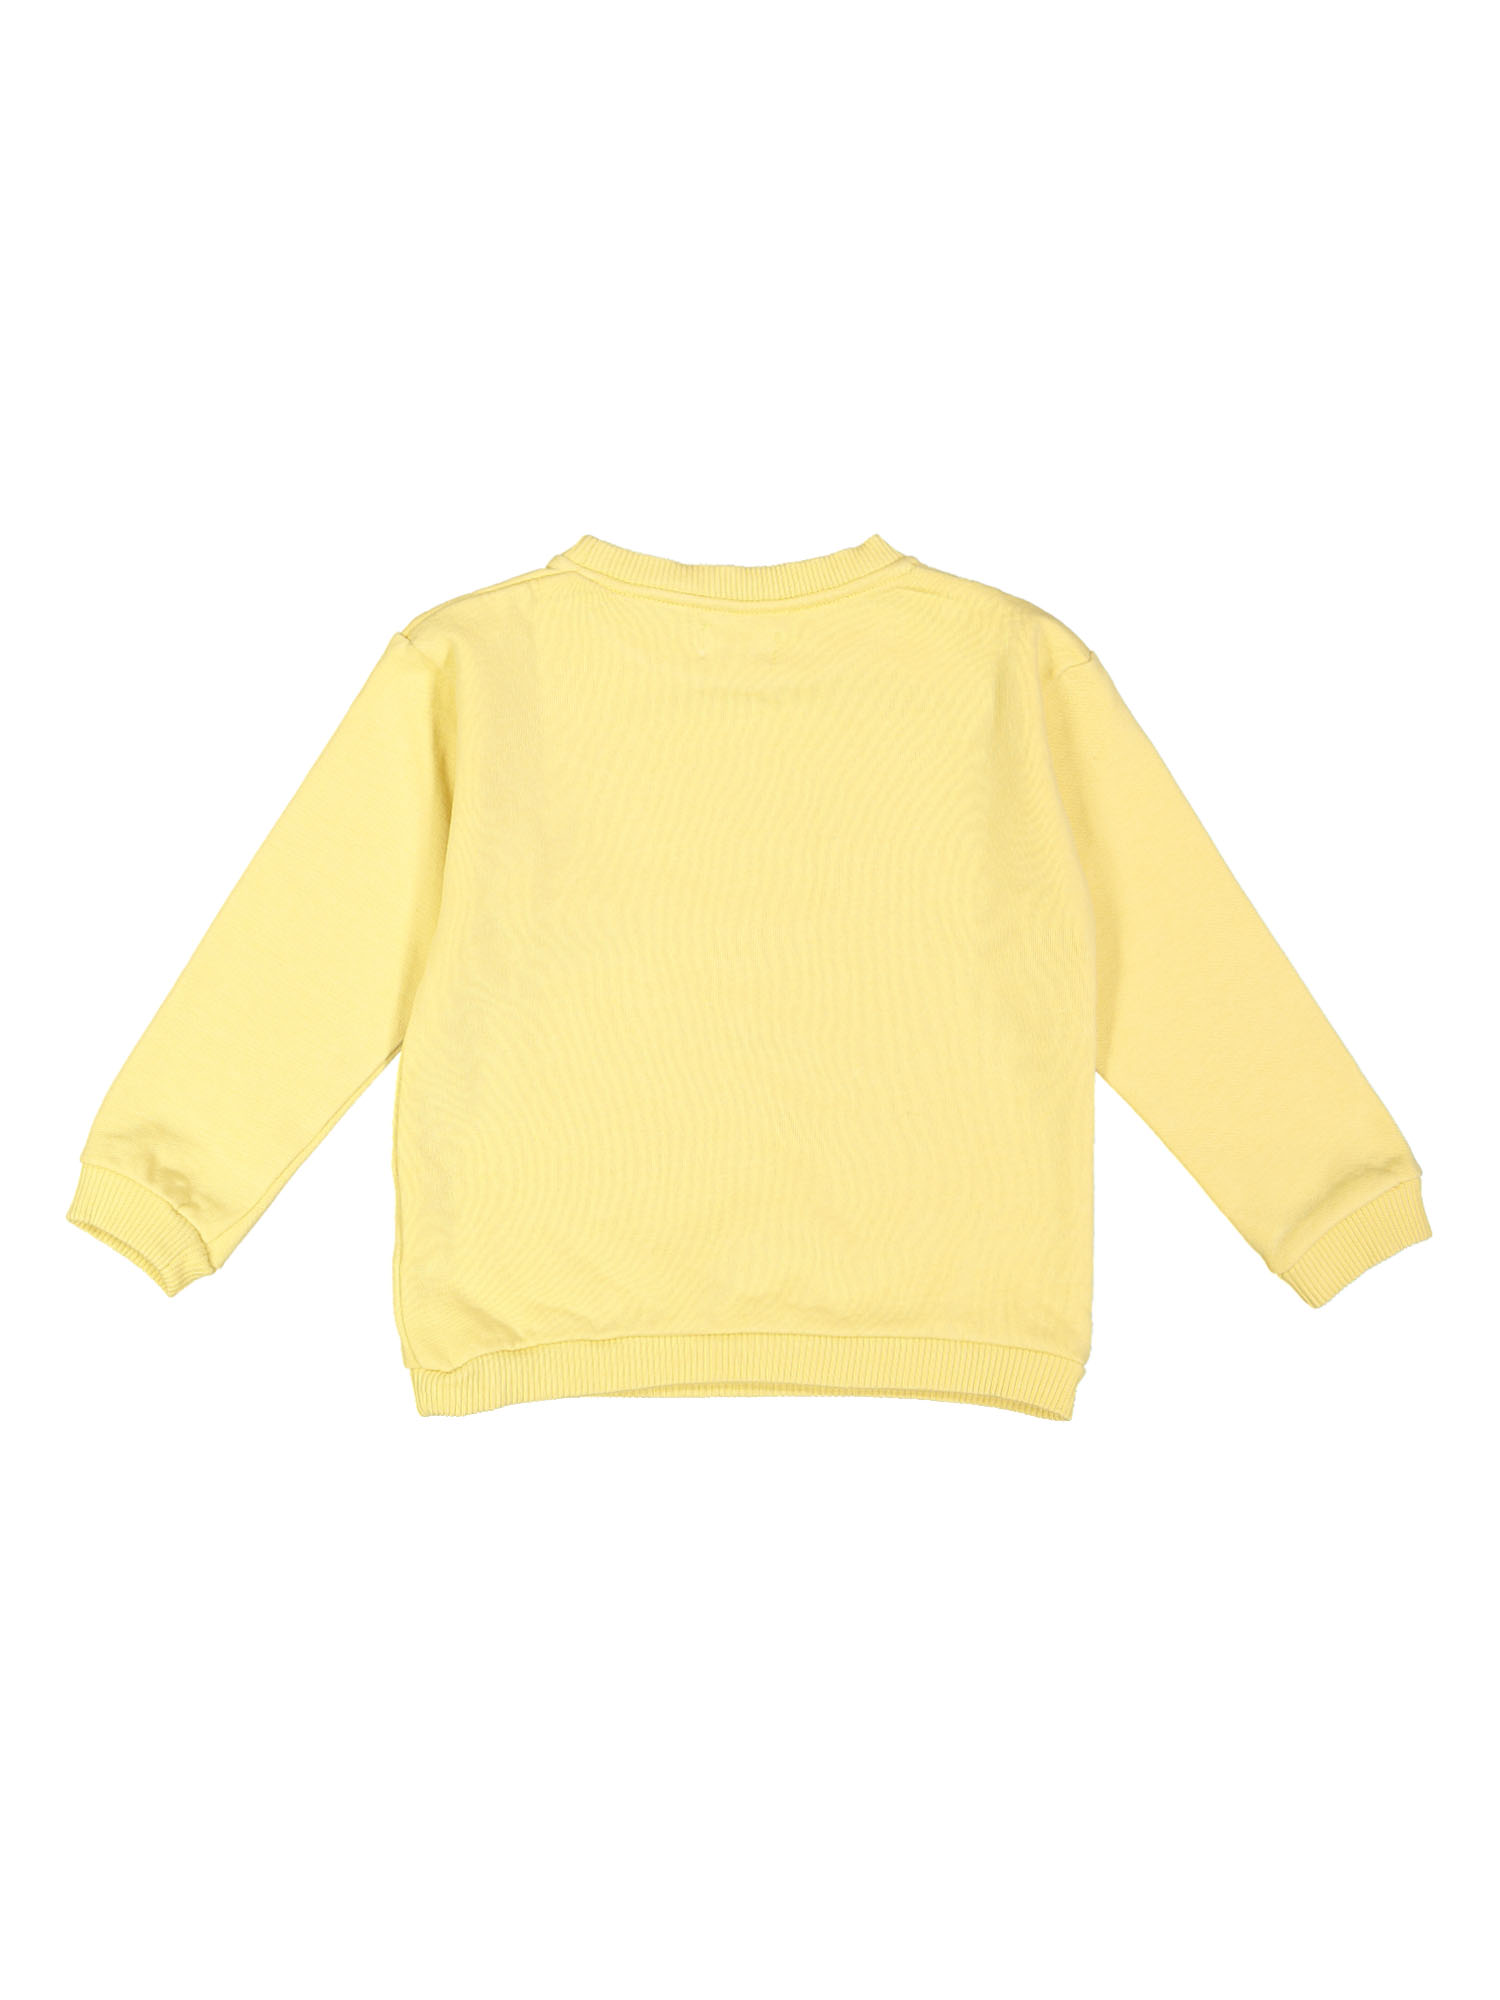 sweater happy clappy geel 08j